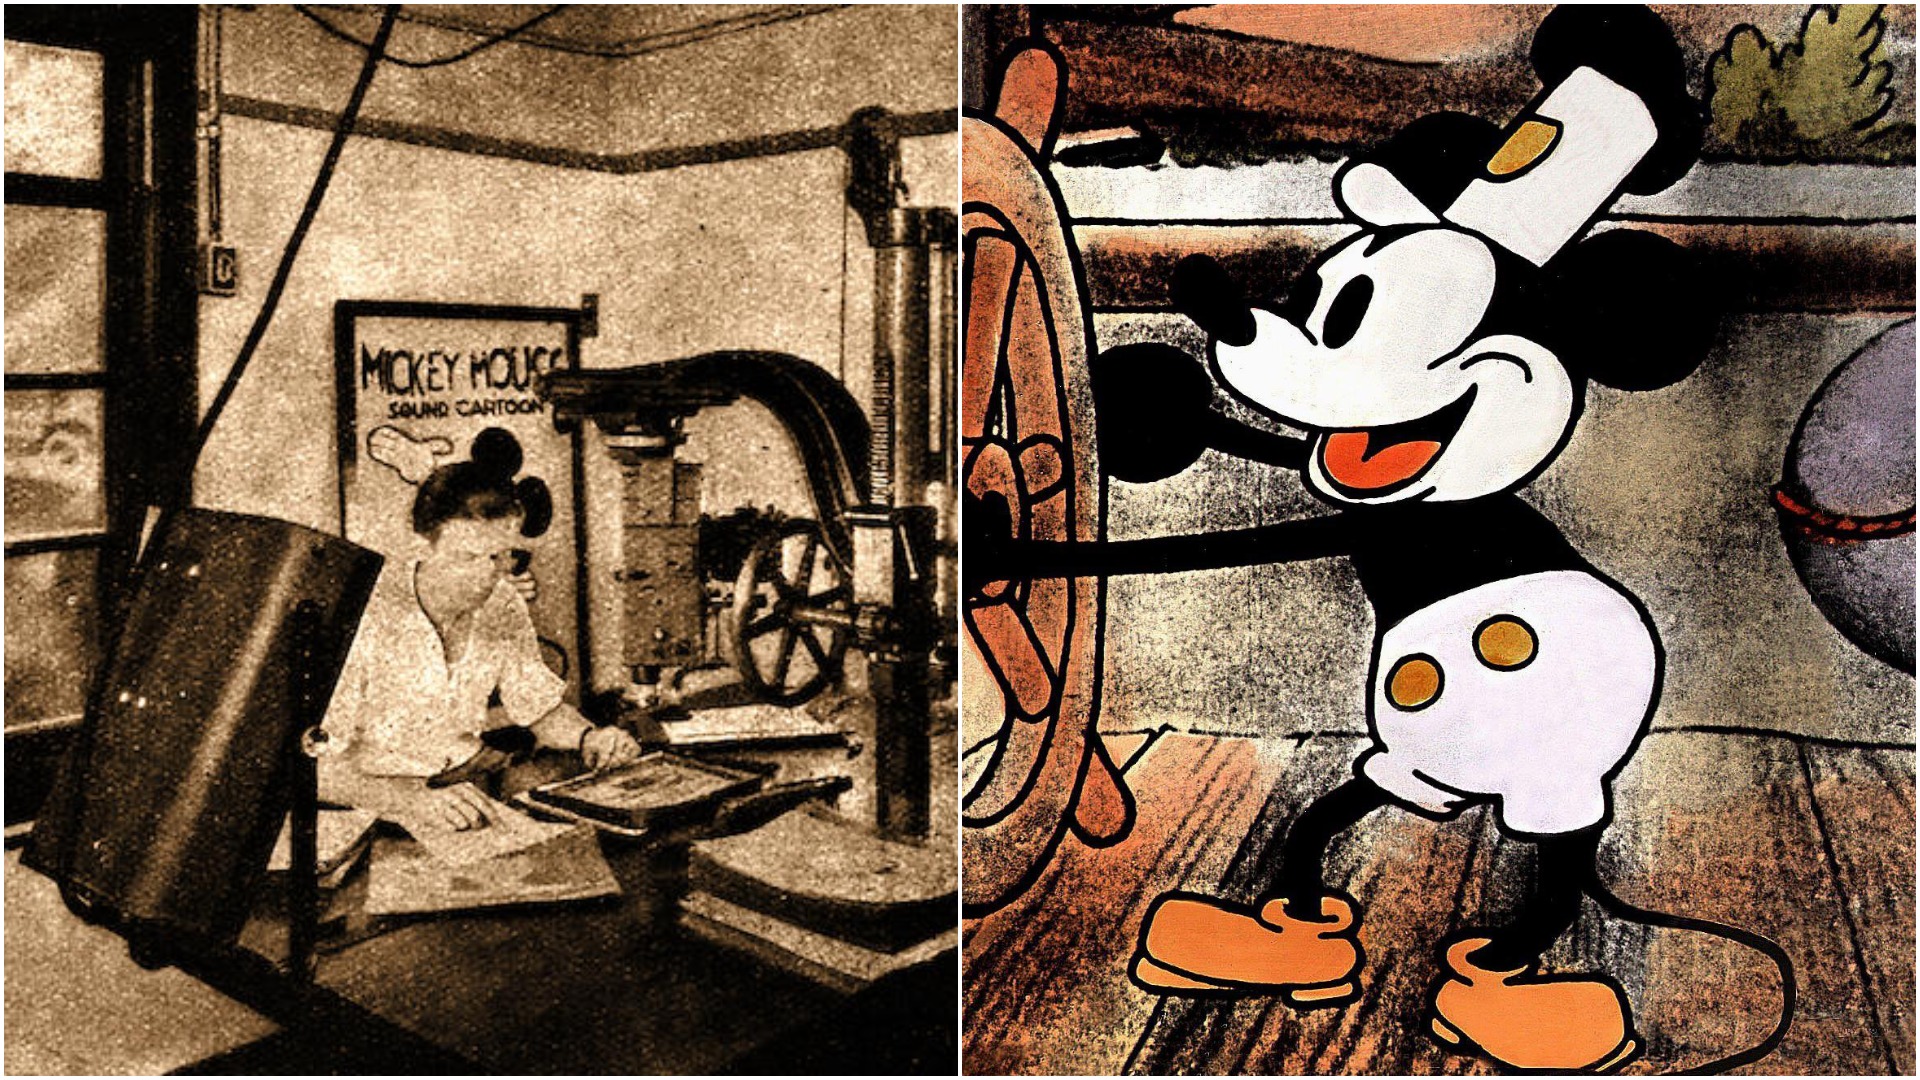 Ub Iwerks: The Animator Behind Mickey Mouse | History Hit